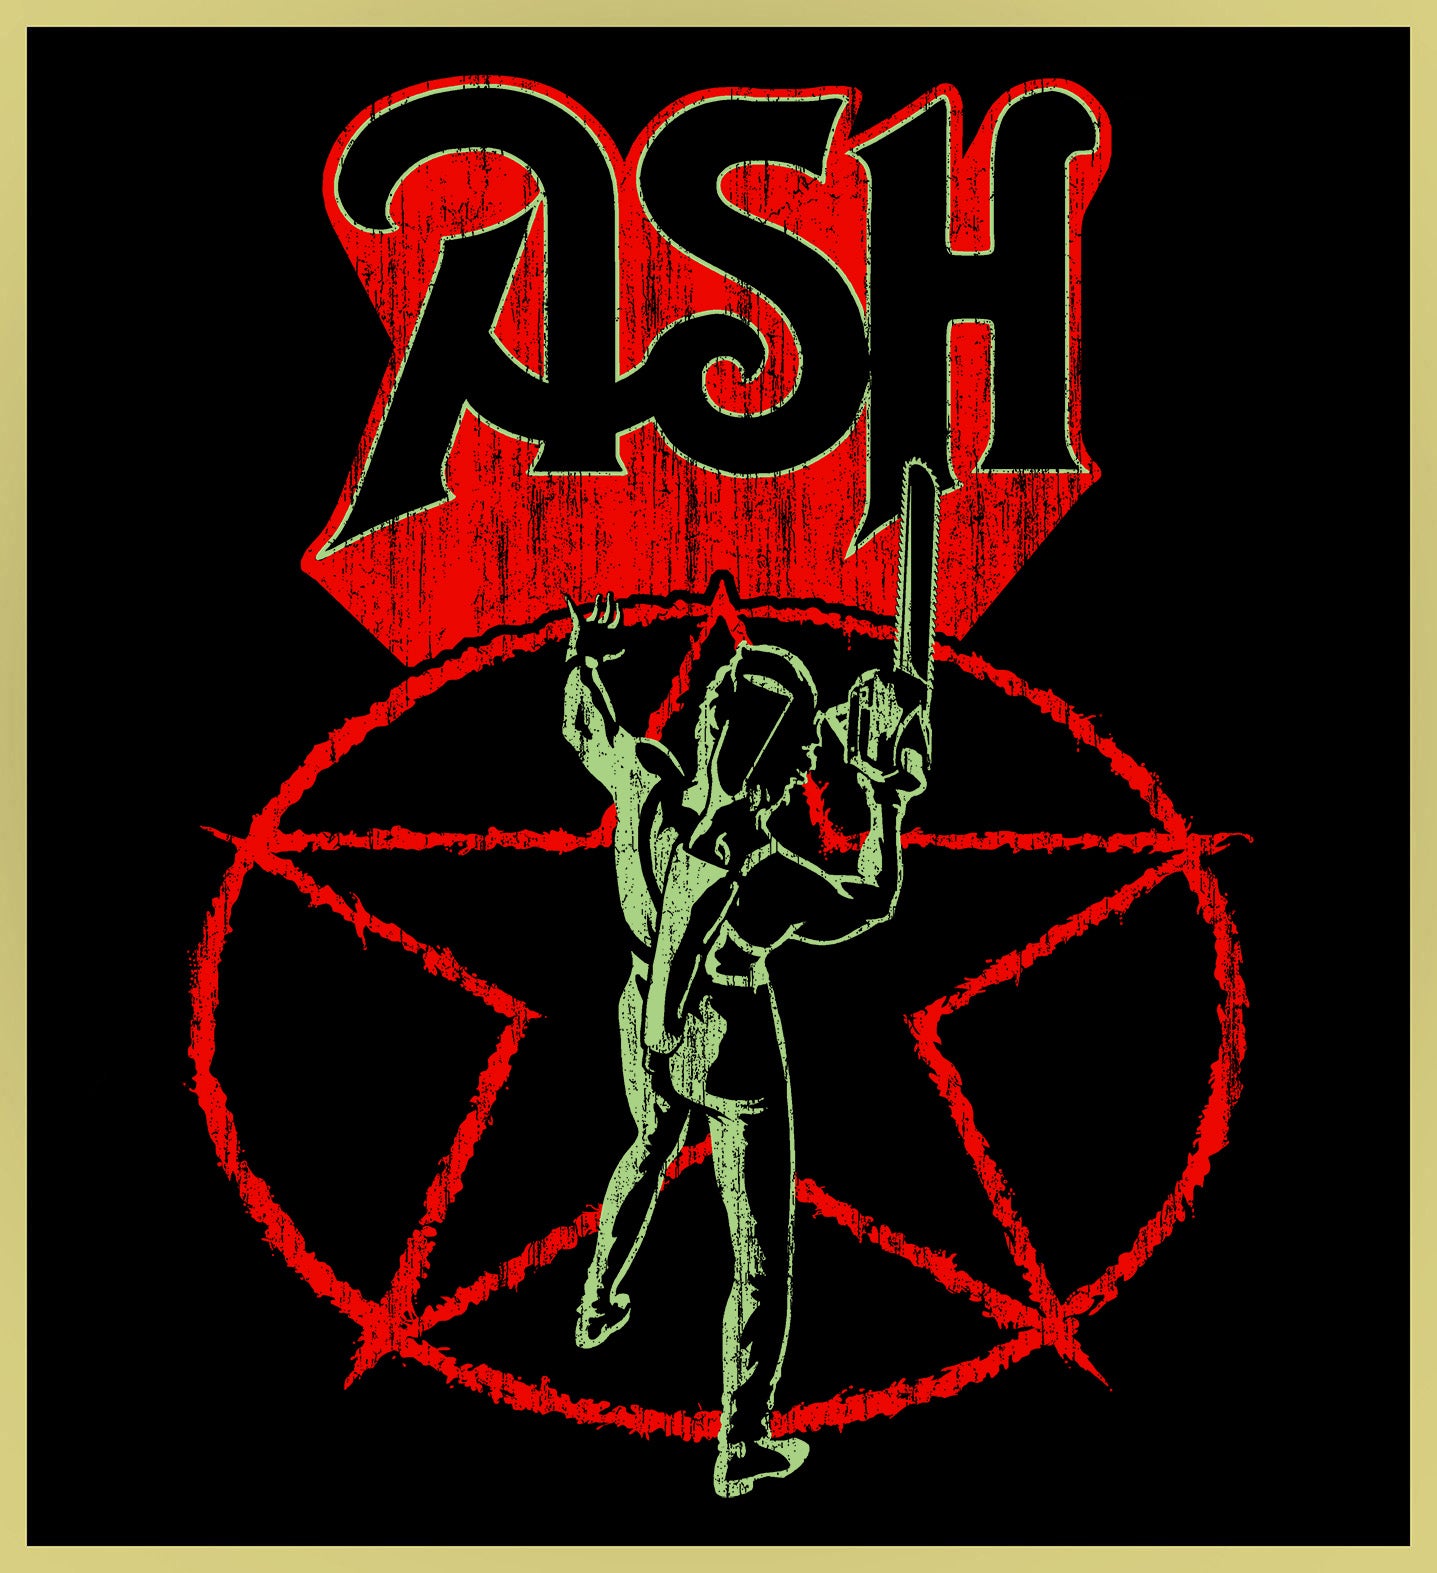 ASH EVIL DEAD - RUSH '2112' CLASSIC ROCK TURBO TEE!